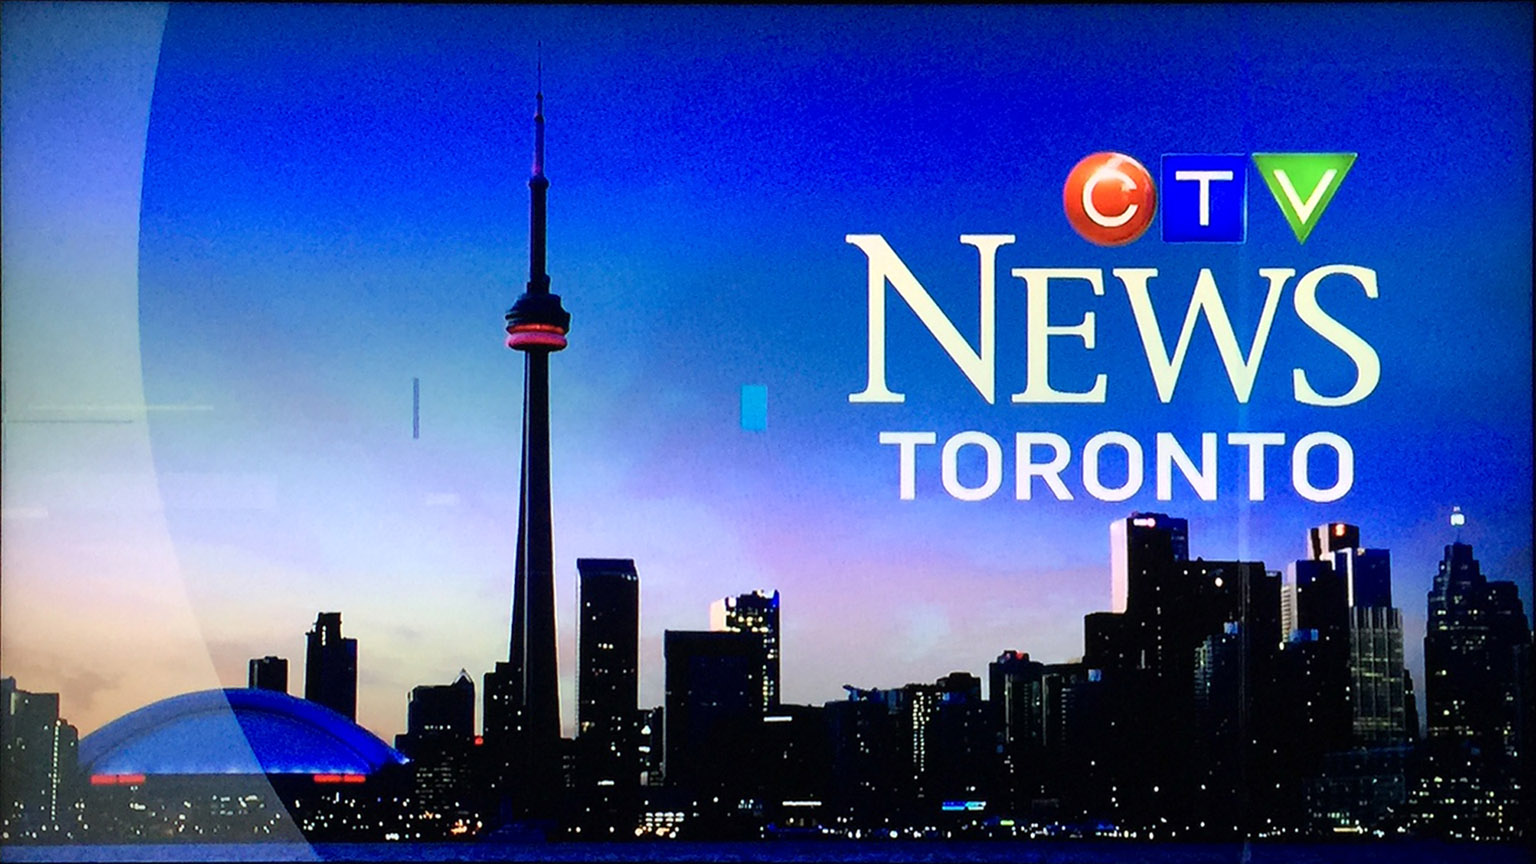 Toronto CTV News 2017-02-06 1130pm - OMA executive committee resigns (image1)